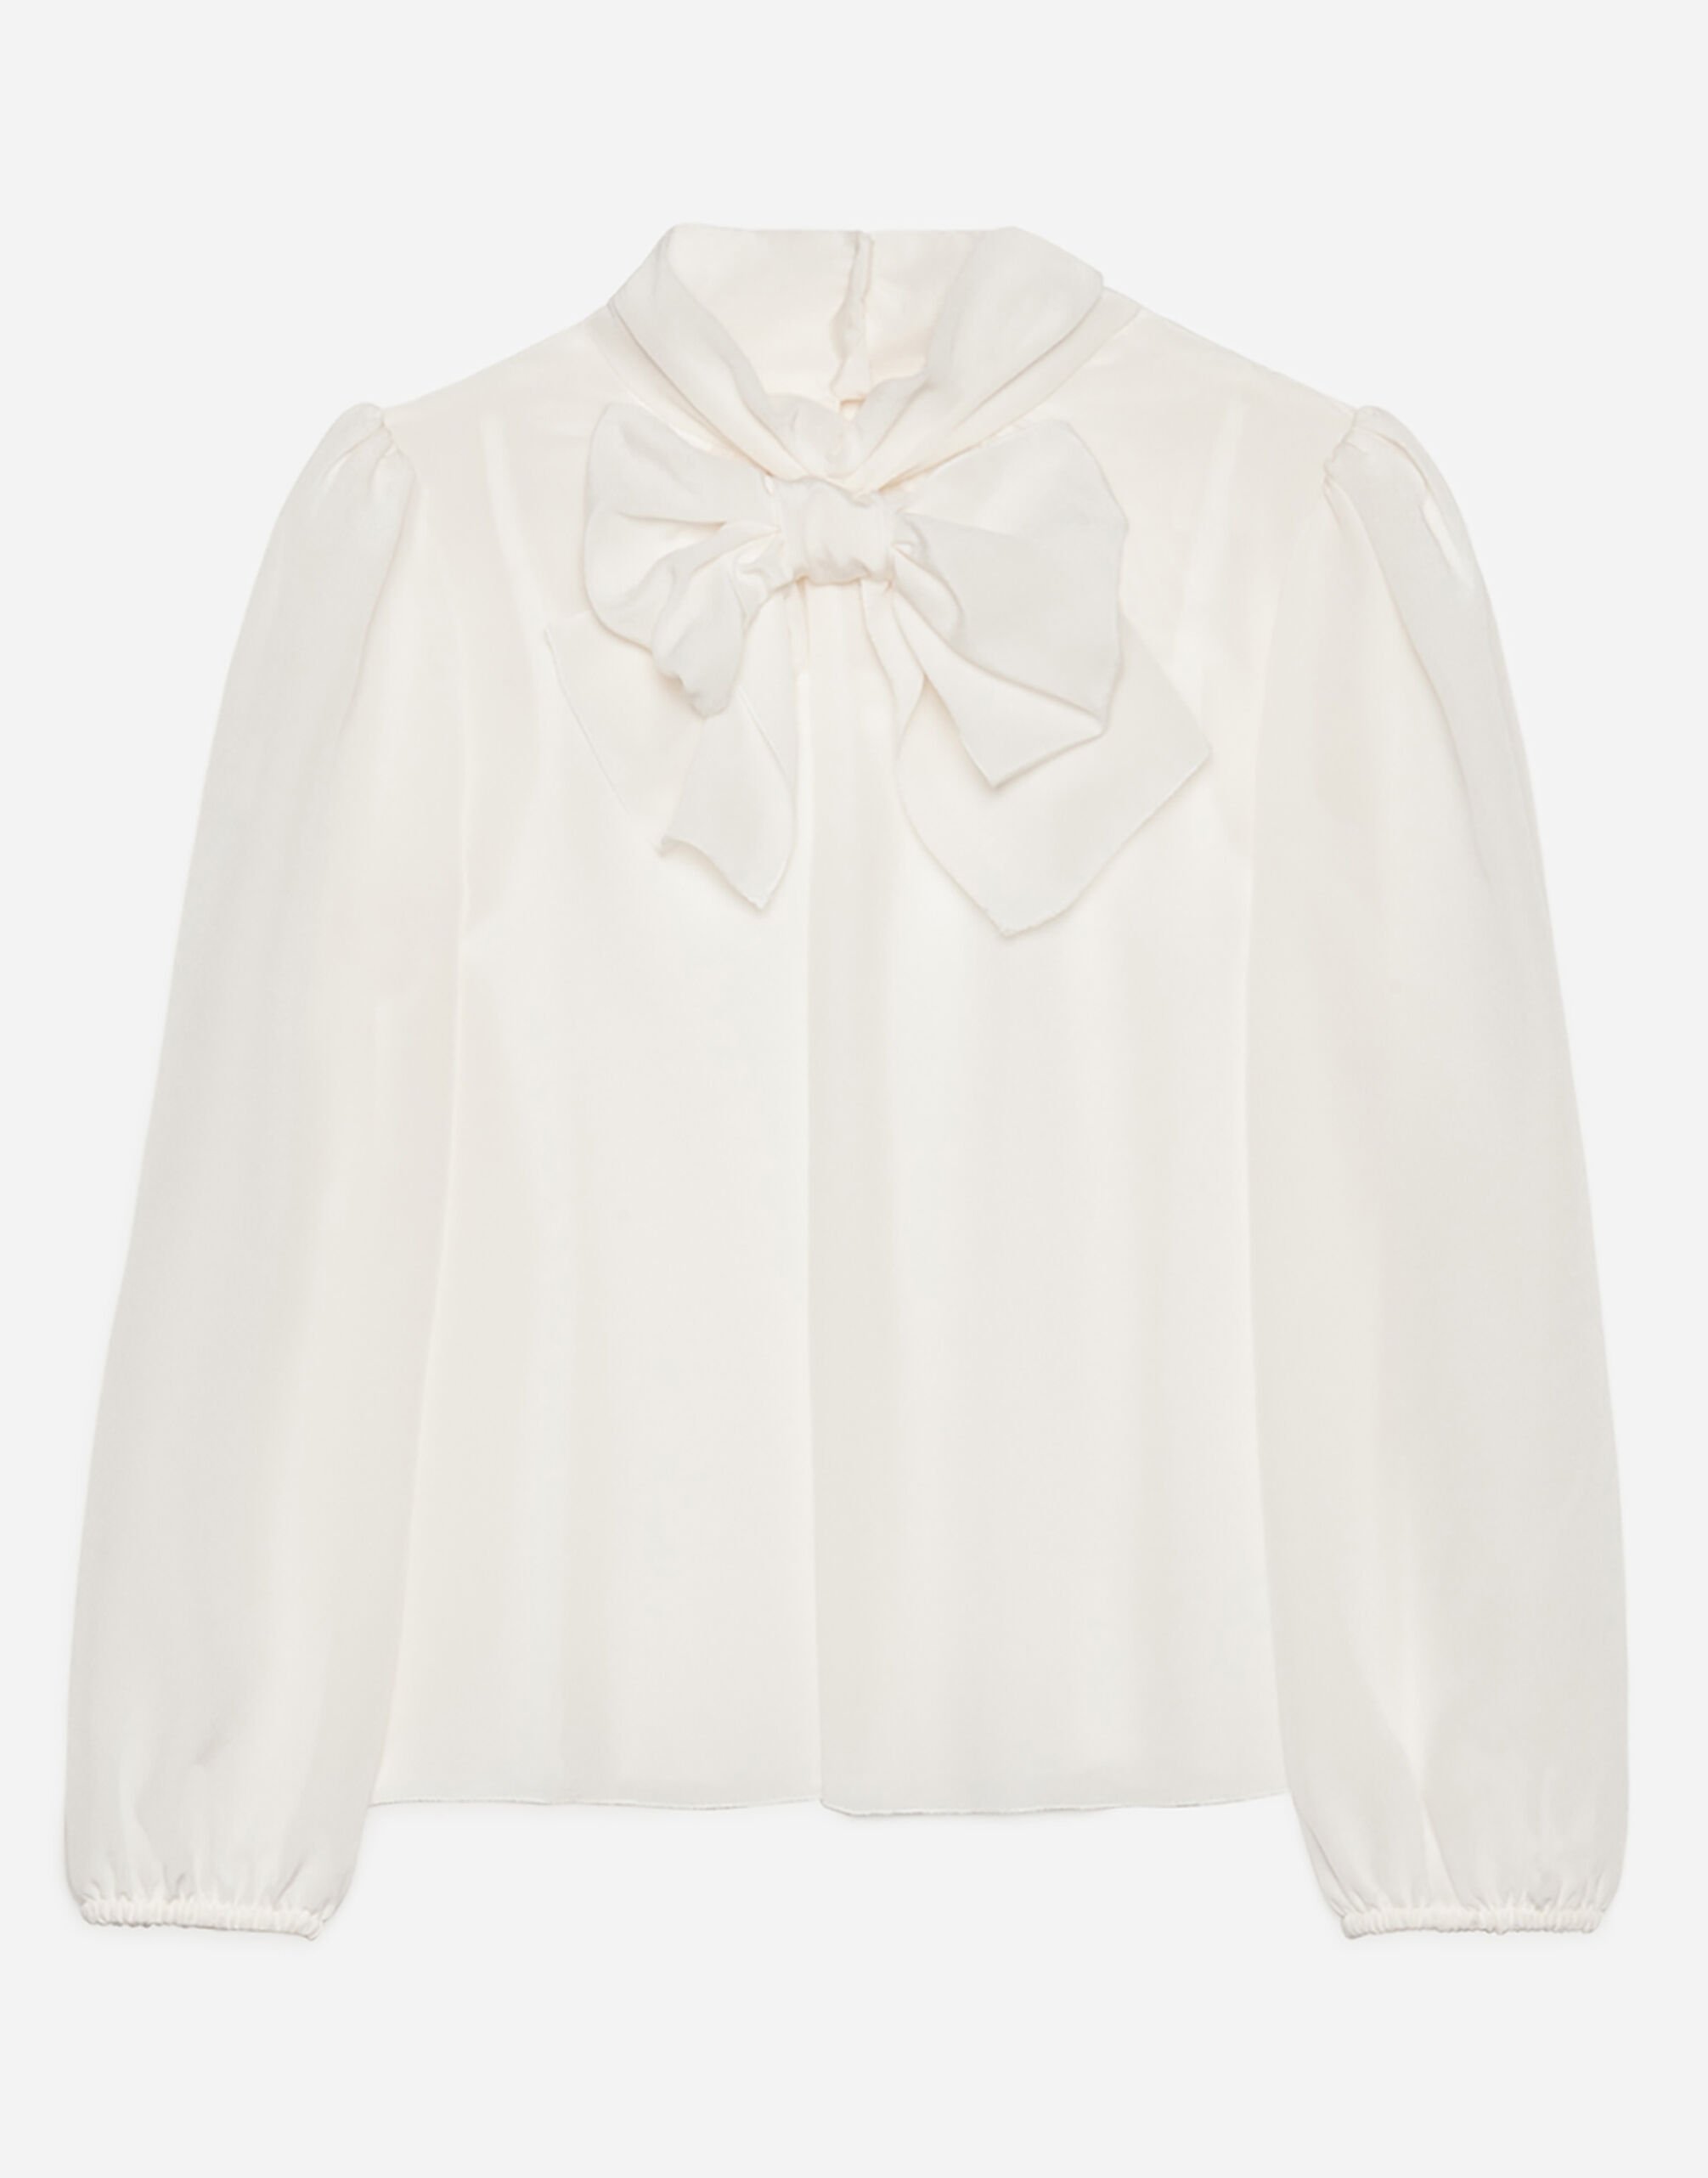 Dolce & Gabbana Crepe de chine blouse Print L54S05G7KXP